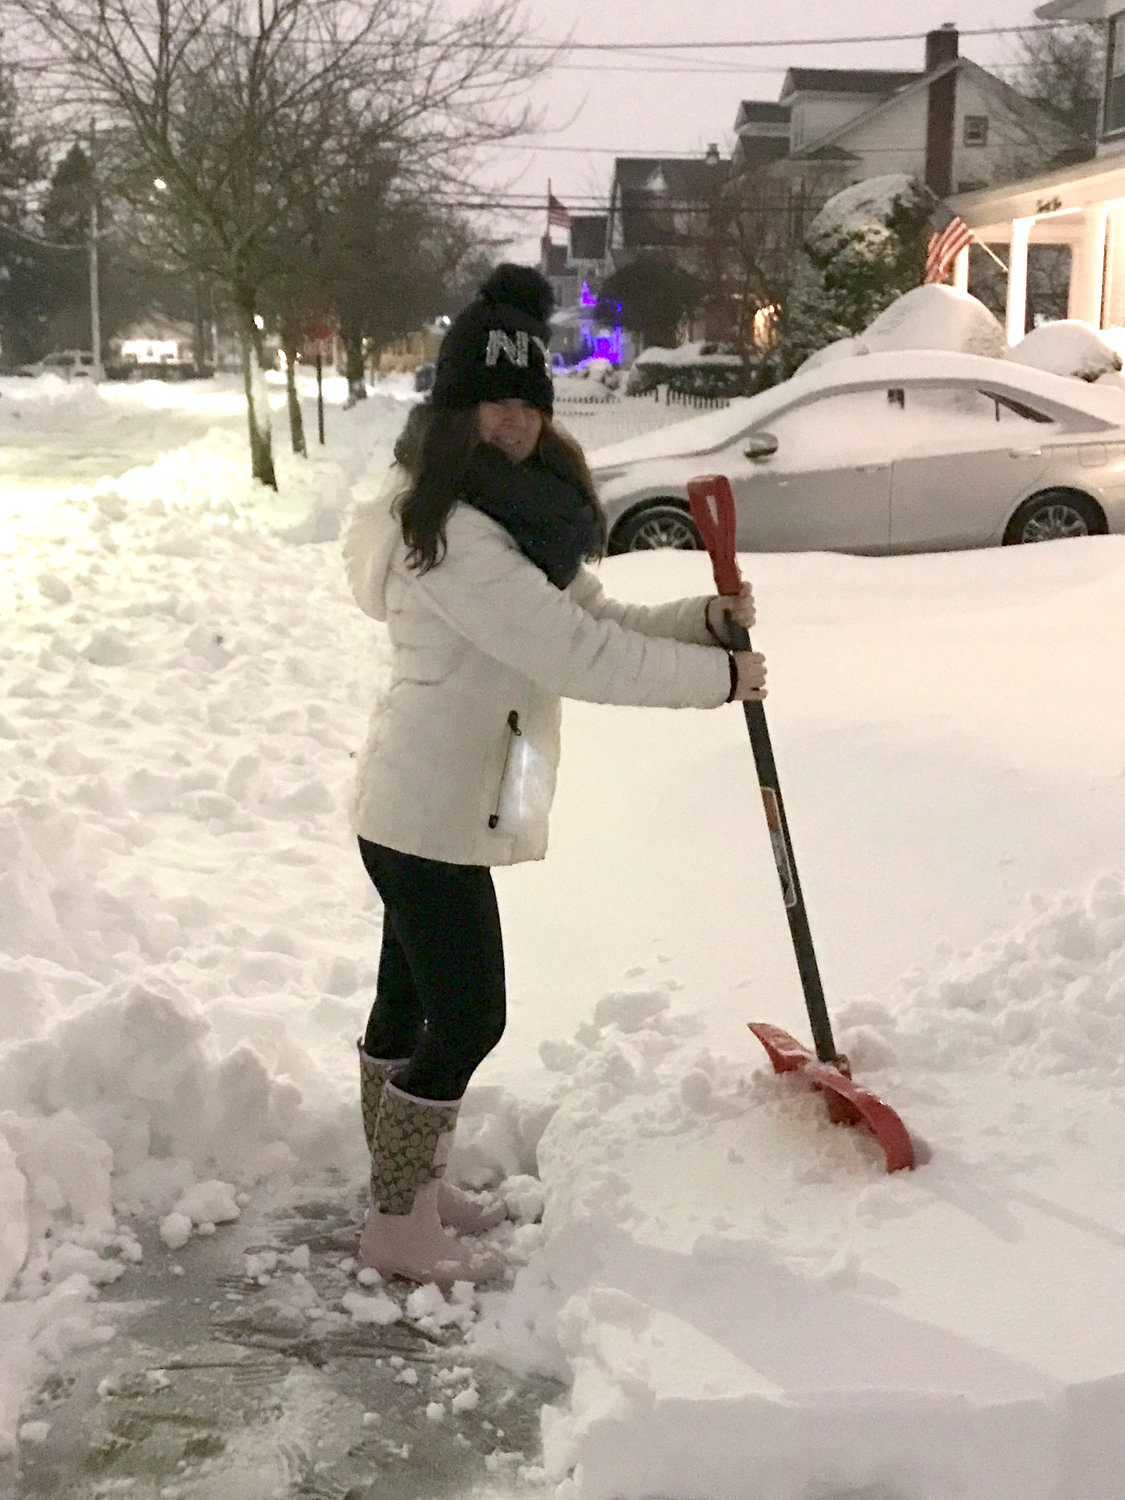 Shannon Ryder volunteering to shovel snow last year last year.